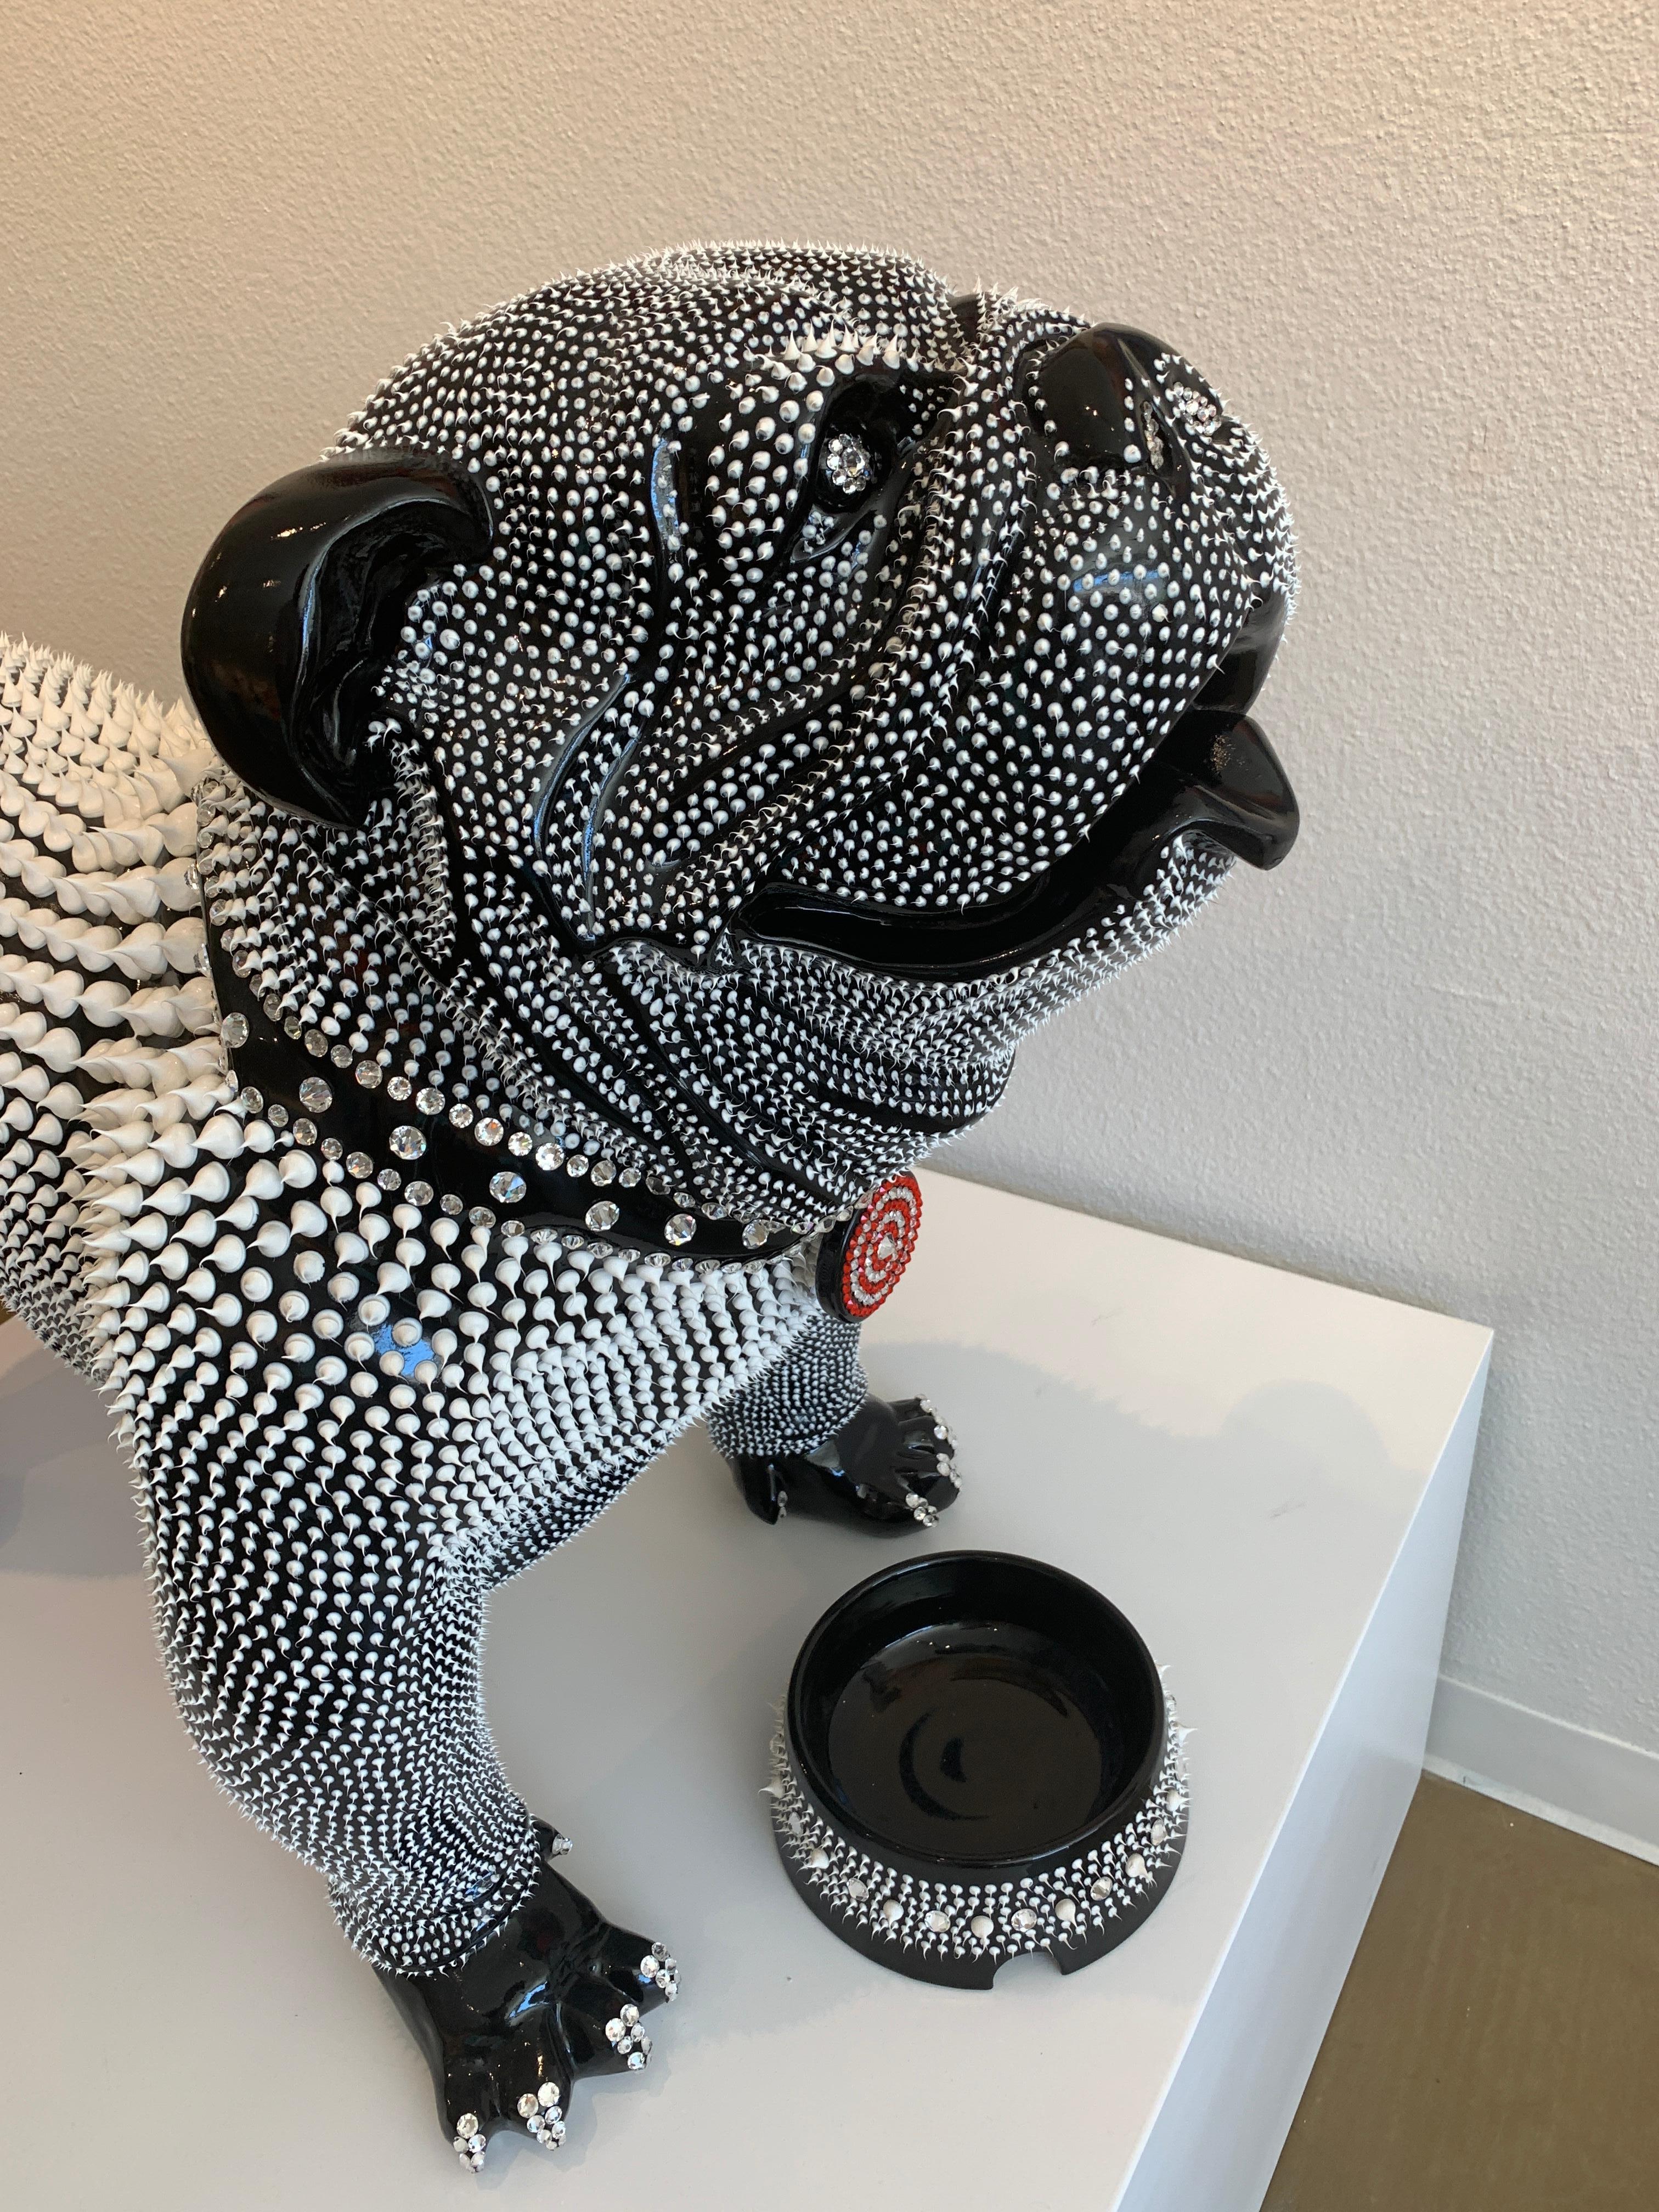 Bulldog #1 and Bowl - Sculpture by Eddy Maniez